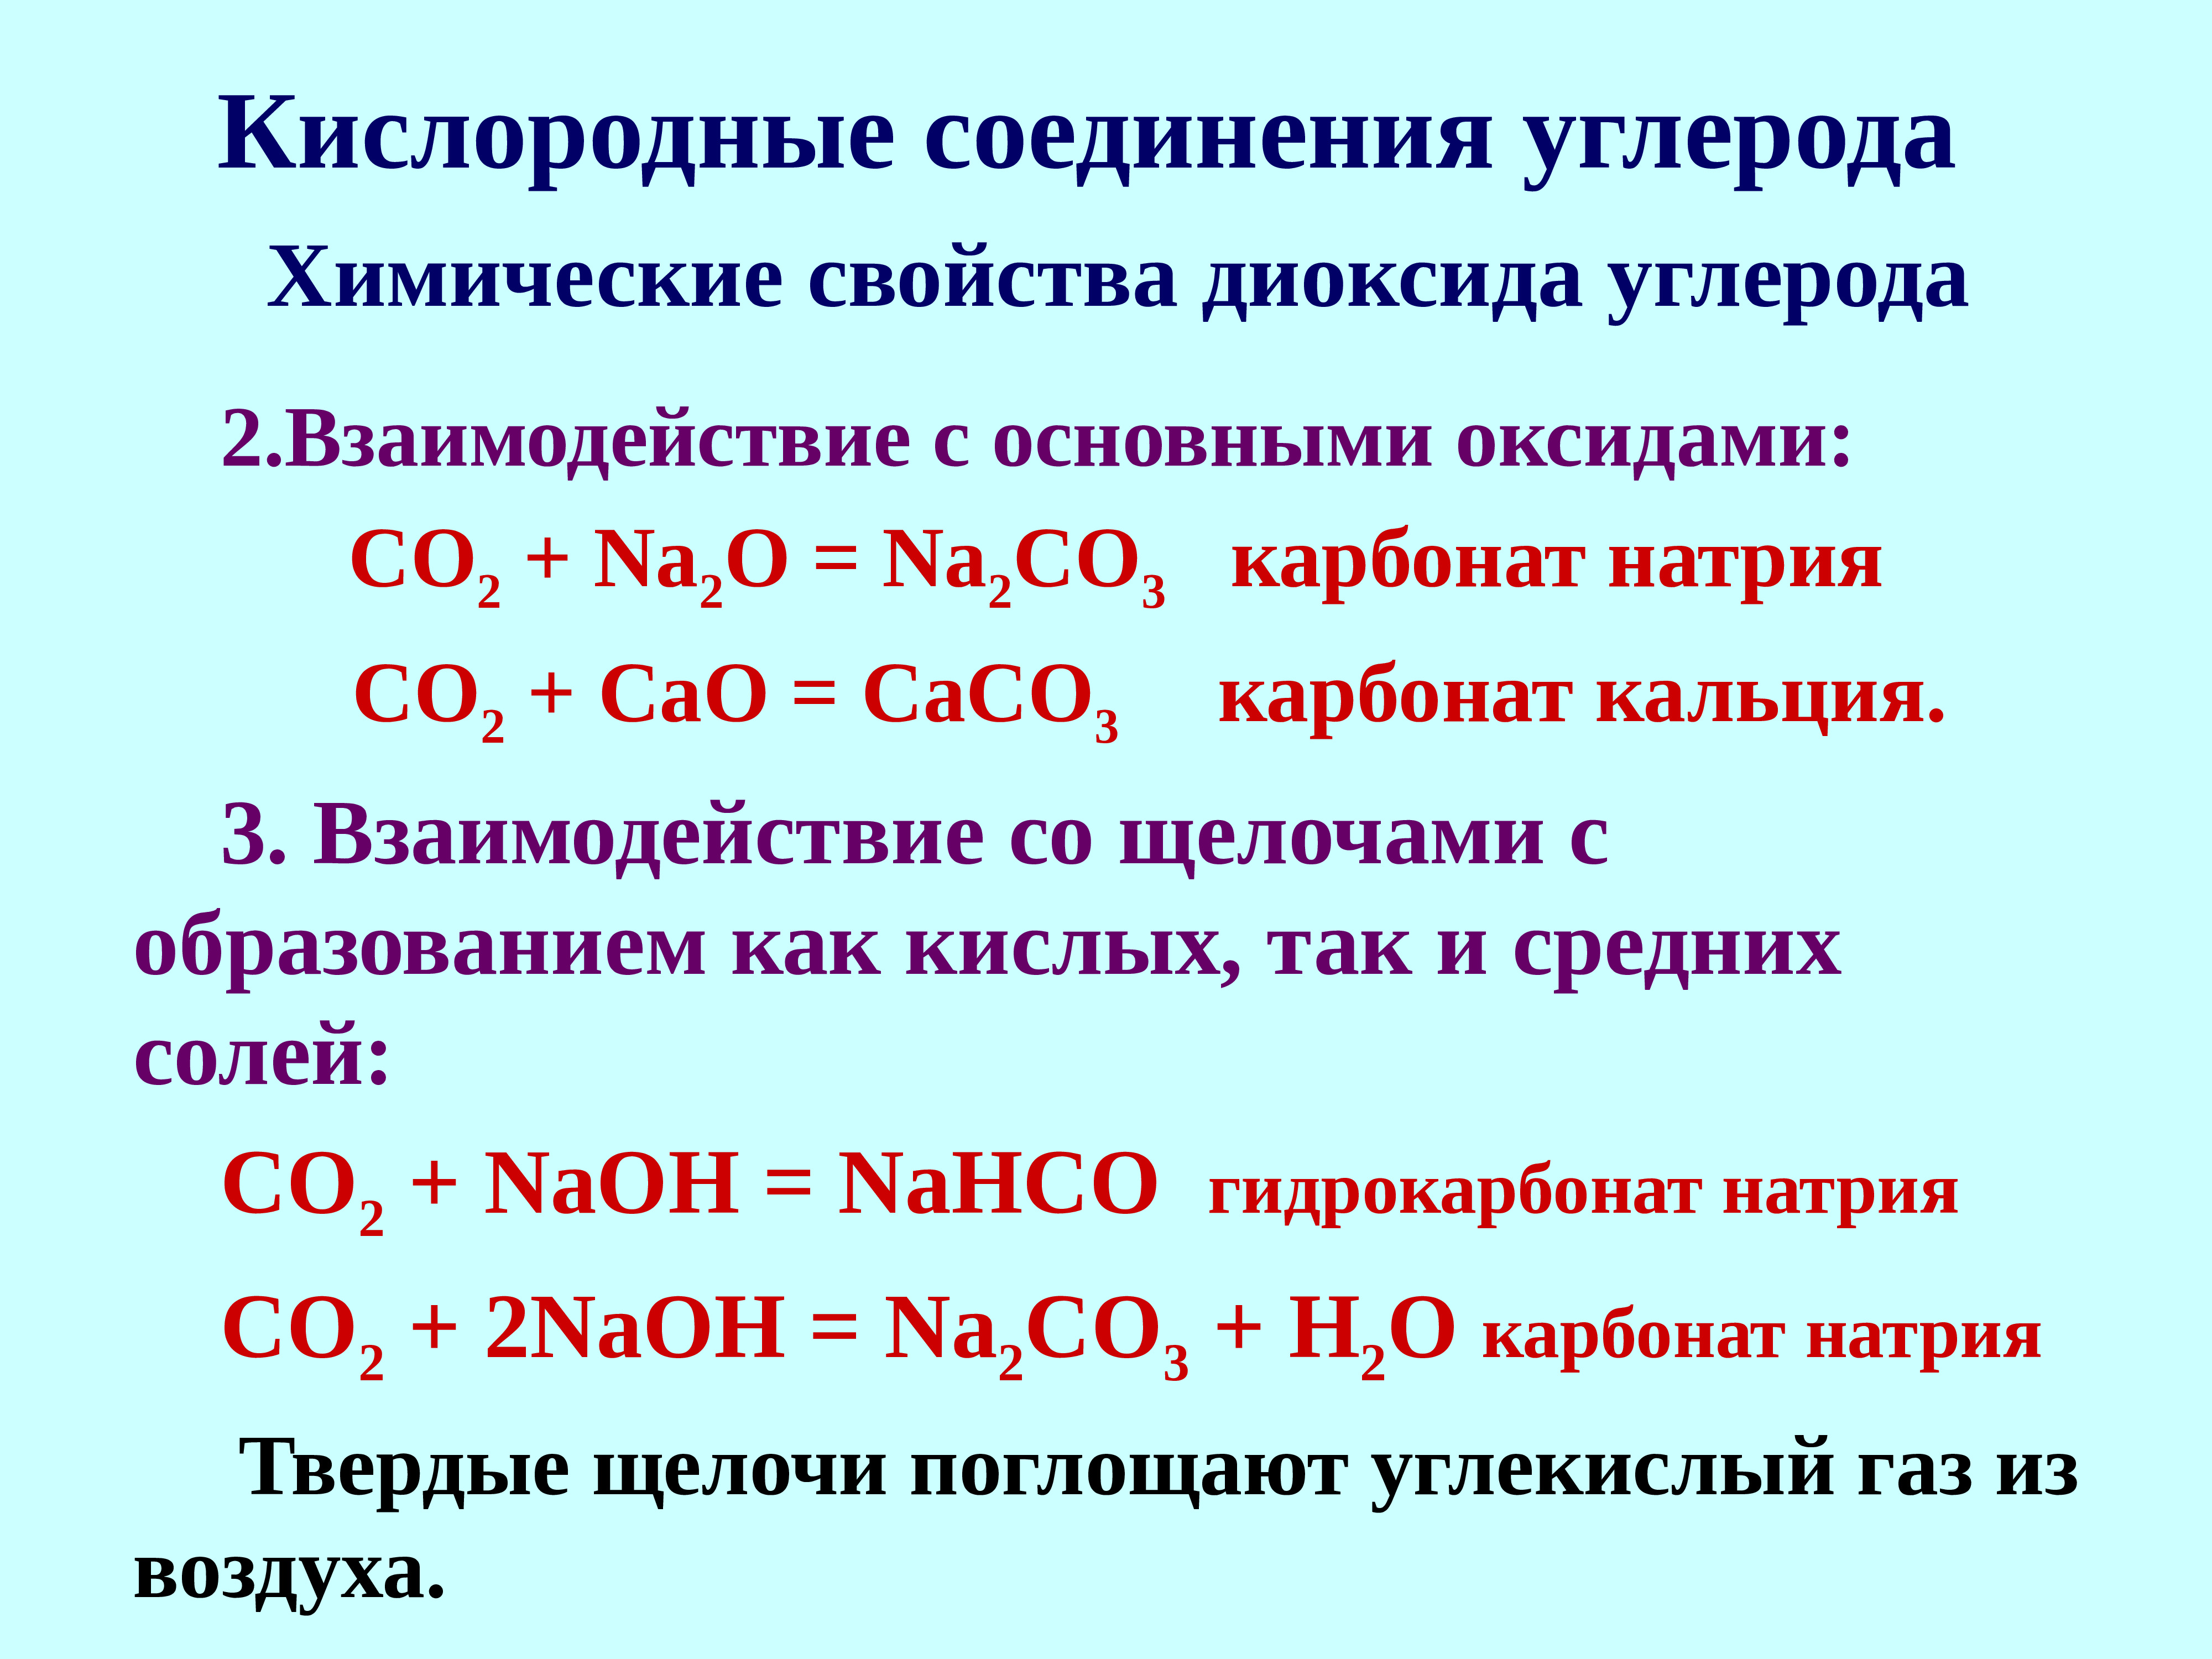 Гидрокарбонат калия в карбонат калия. Кислородные соединения. Кислородные соединения углерода. Карбонат кальция в гидрокарбонат кальция. Карбонат кальция и углекислый ГАЗ.